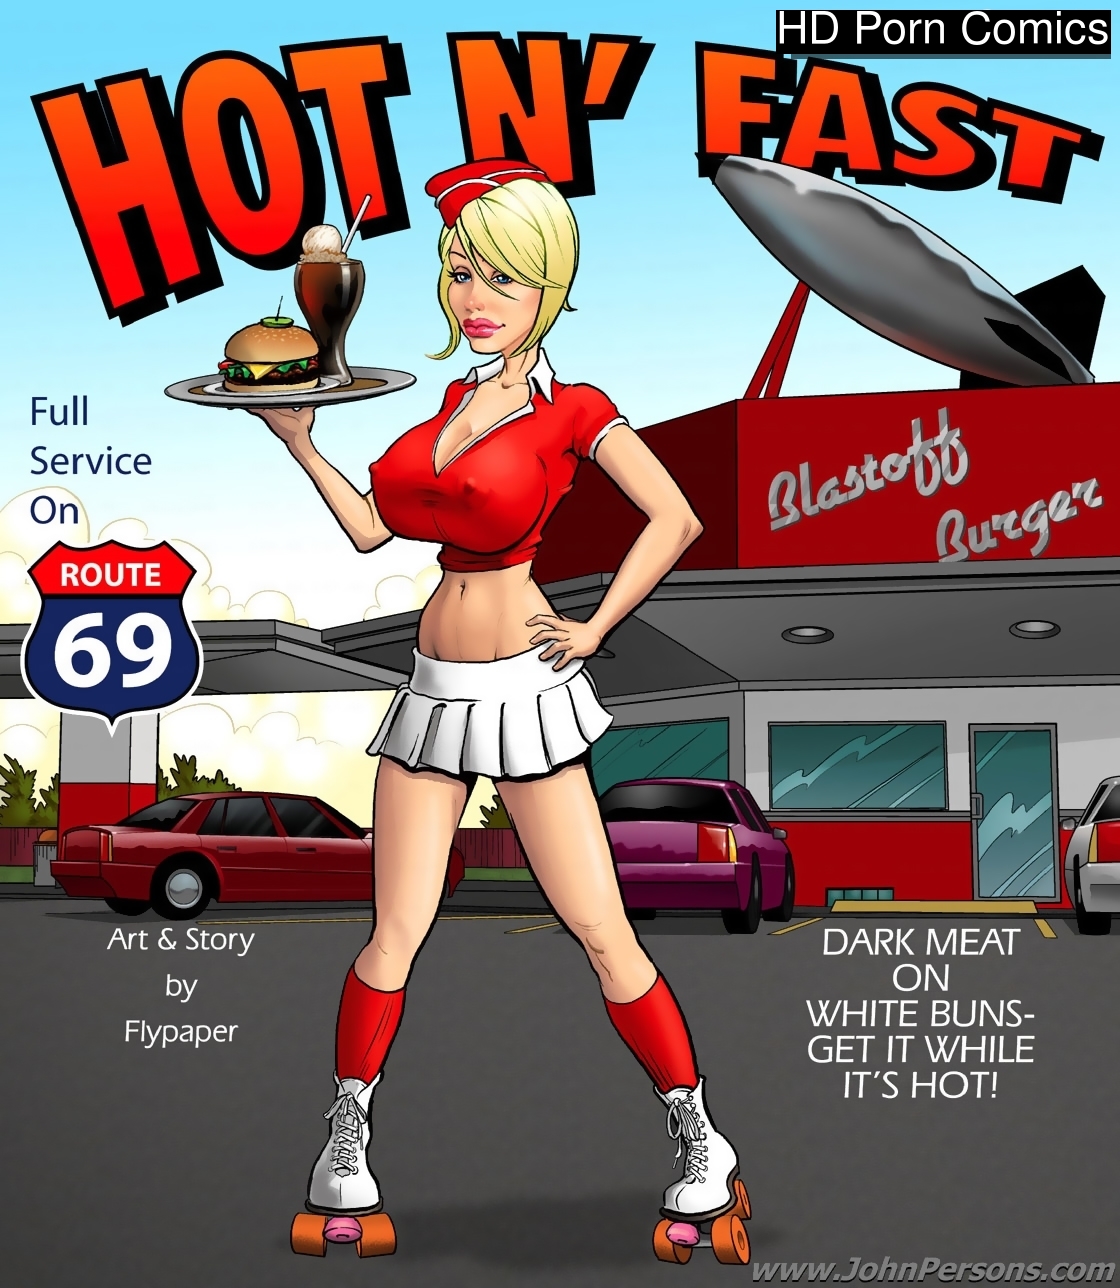 Fast Cartoon Sex - Hot And Fast Sex Comic - HD Porn Comics